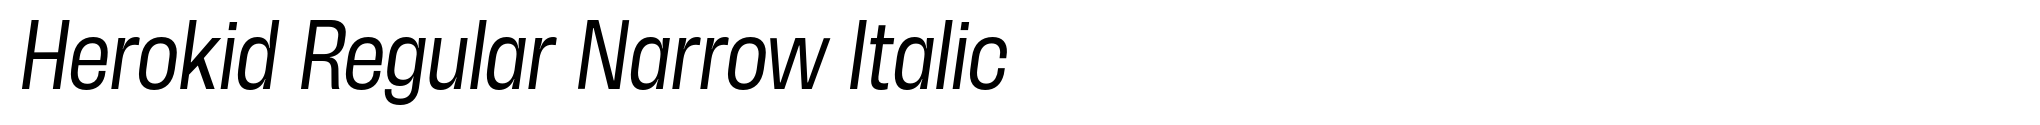 Herokid Regular Narrow Italic image